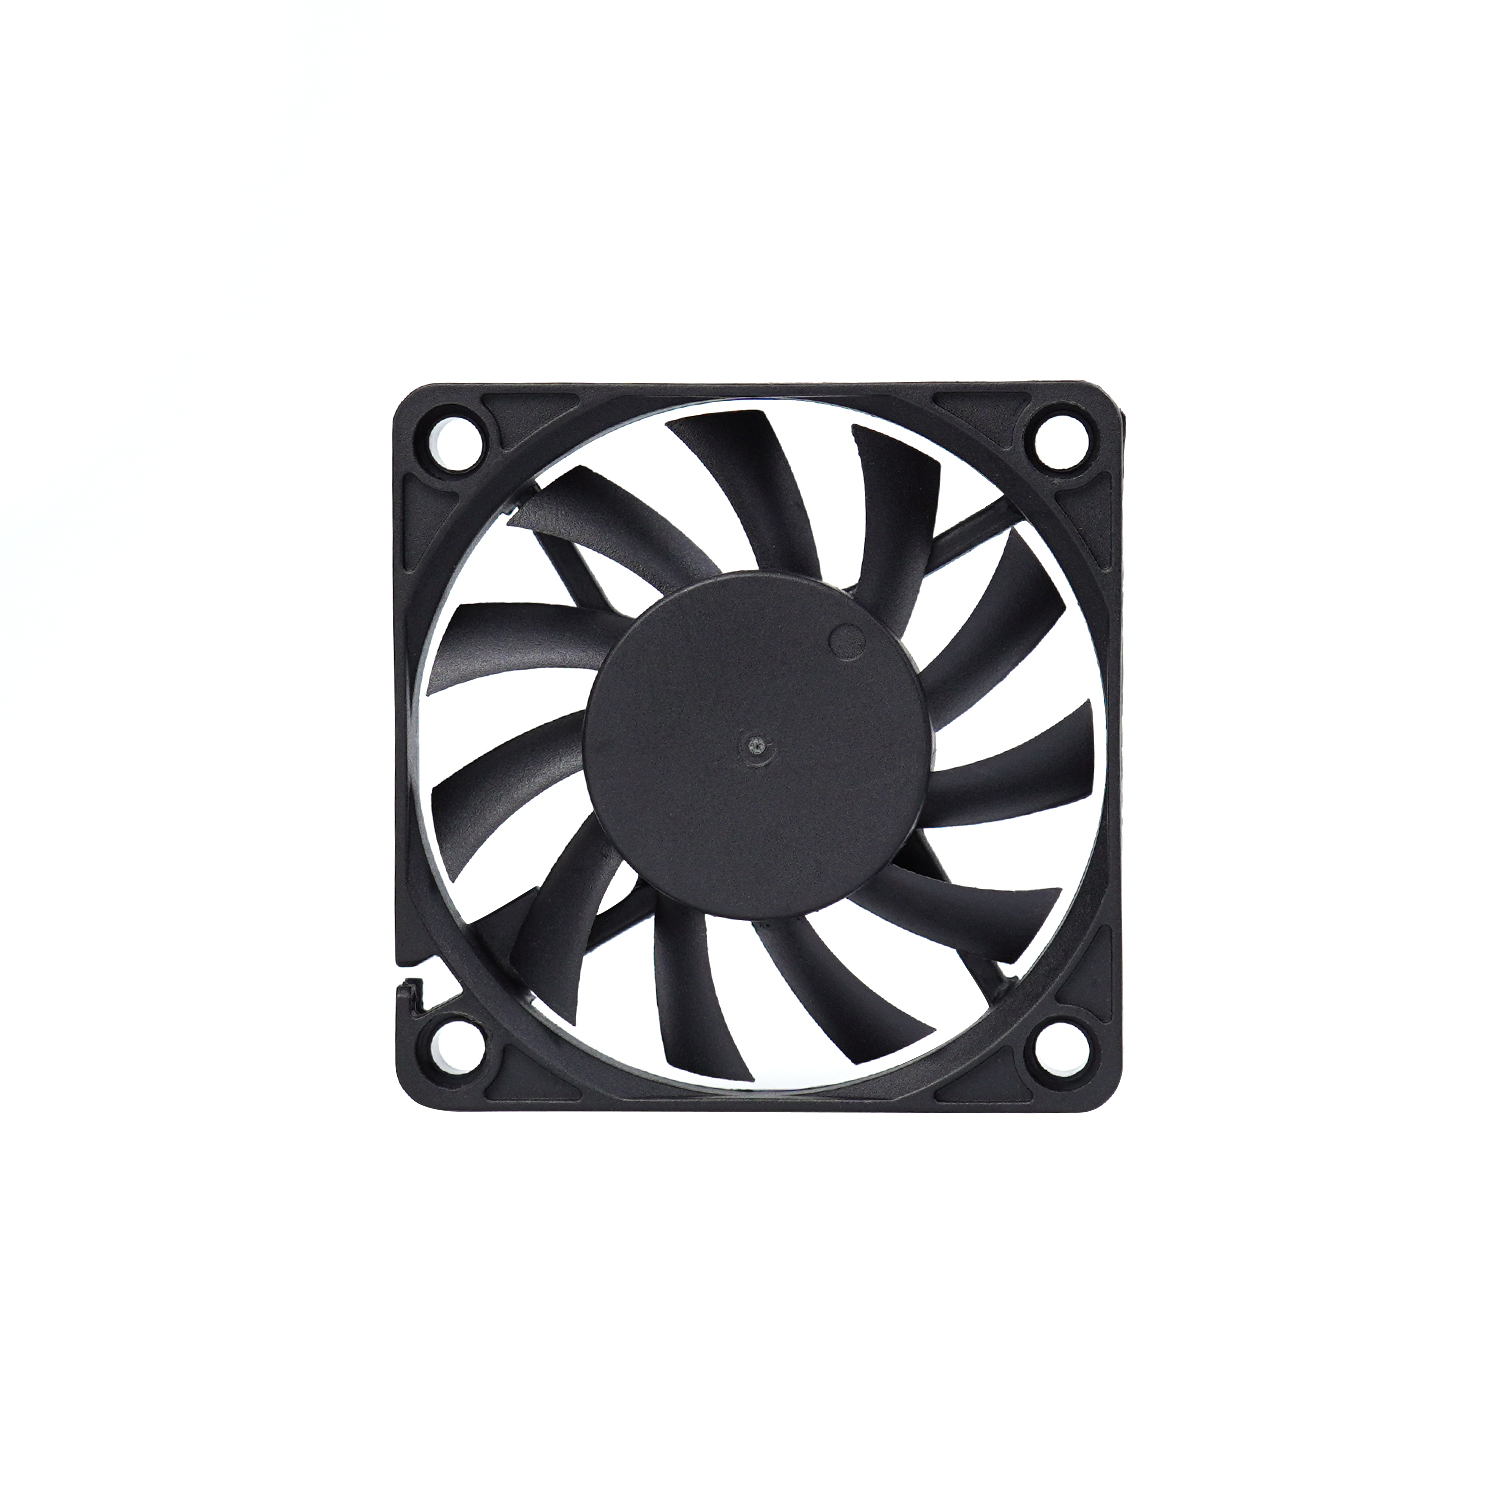 60x60x10 6010 60mm 5v 12v dc axial fan for air purifier